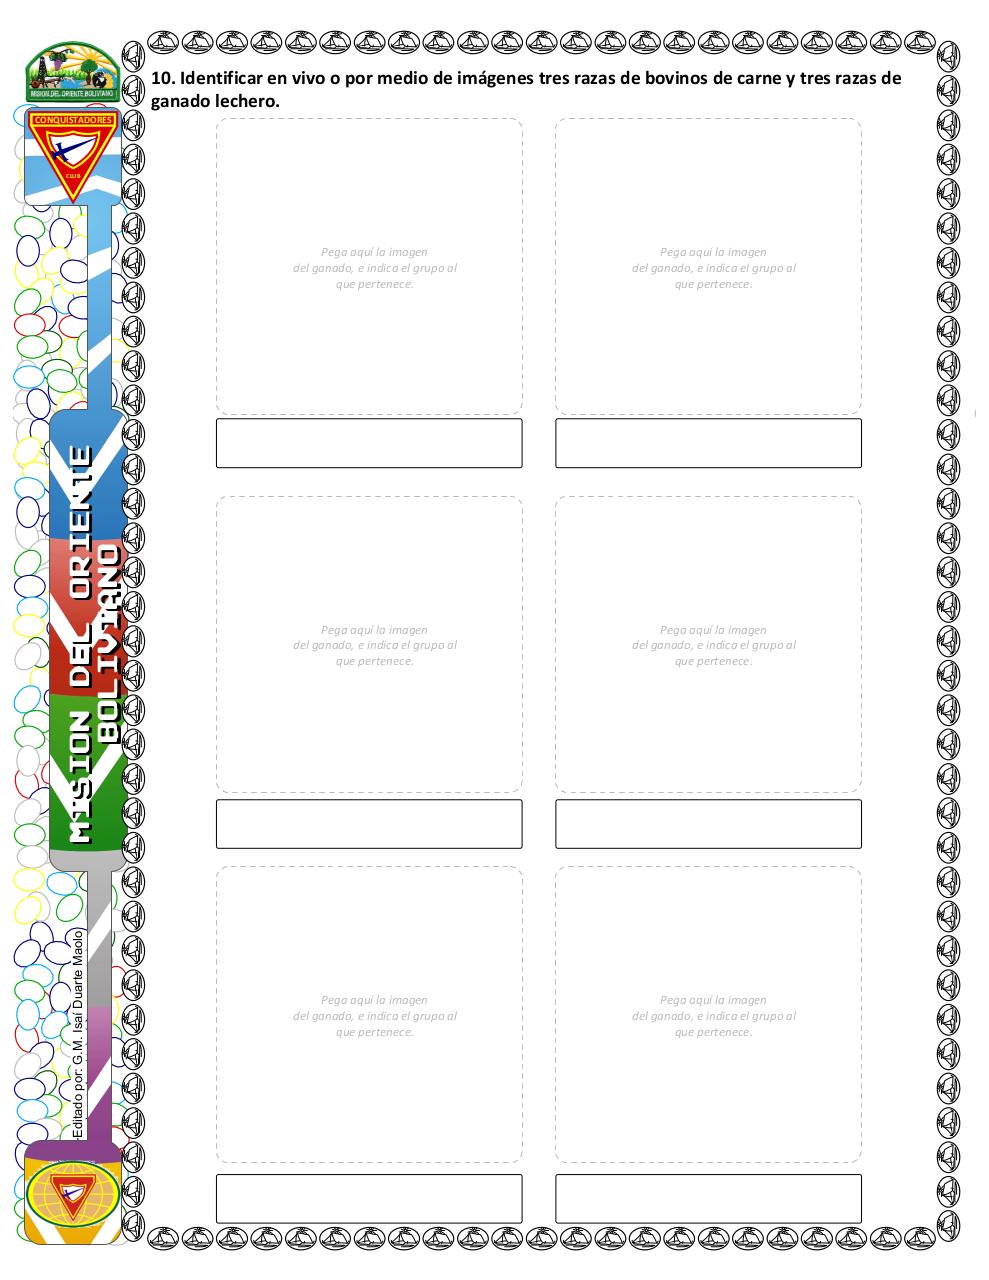 AA 014 - Ganaderia.pdf - page 4/8